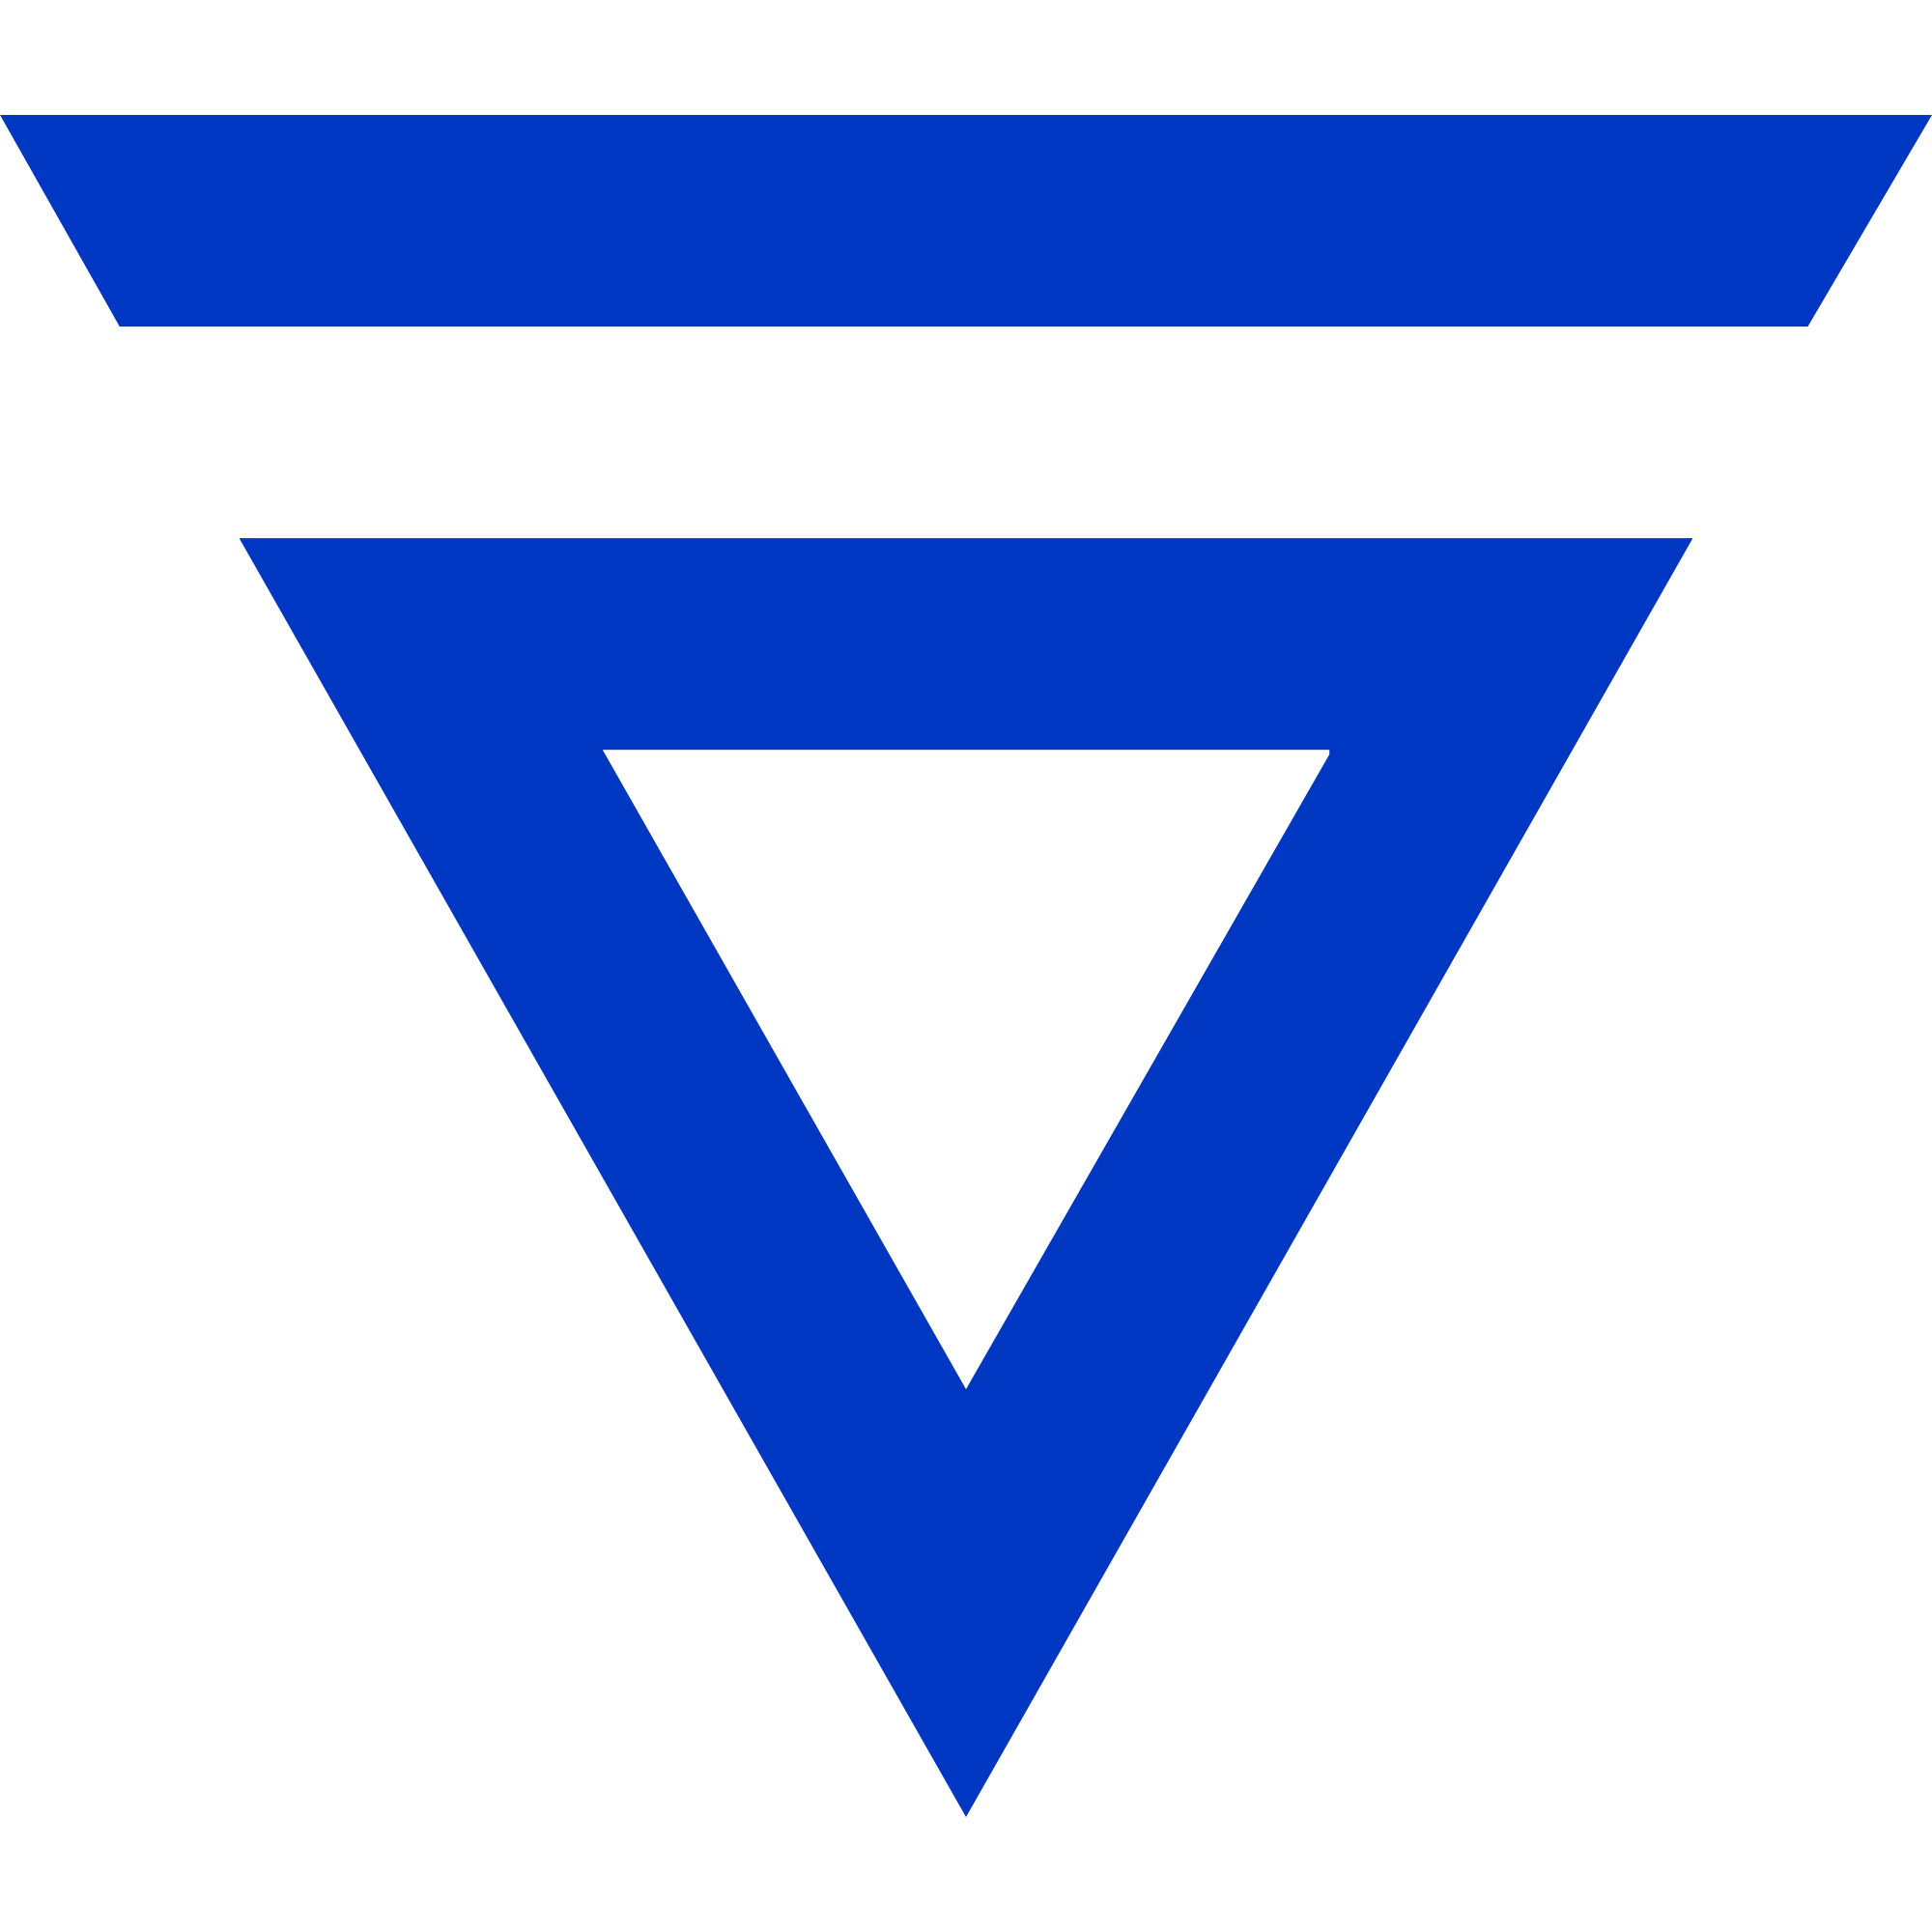 Elastos logo in png format